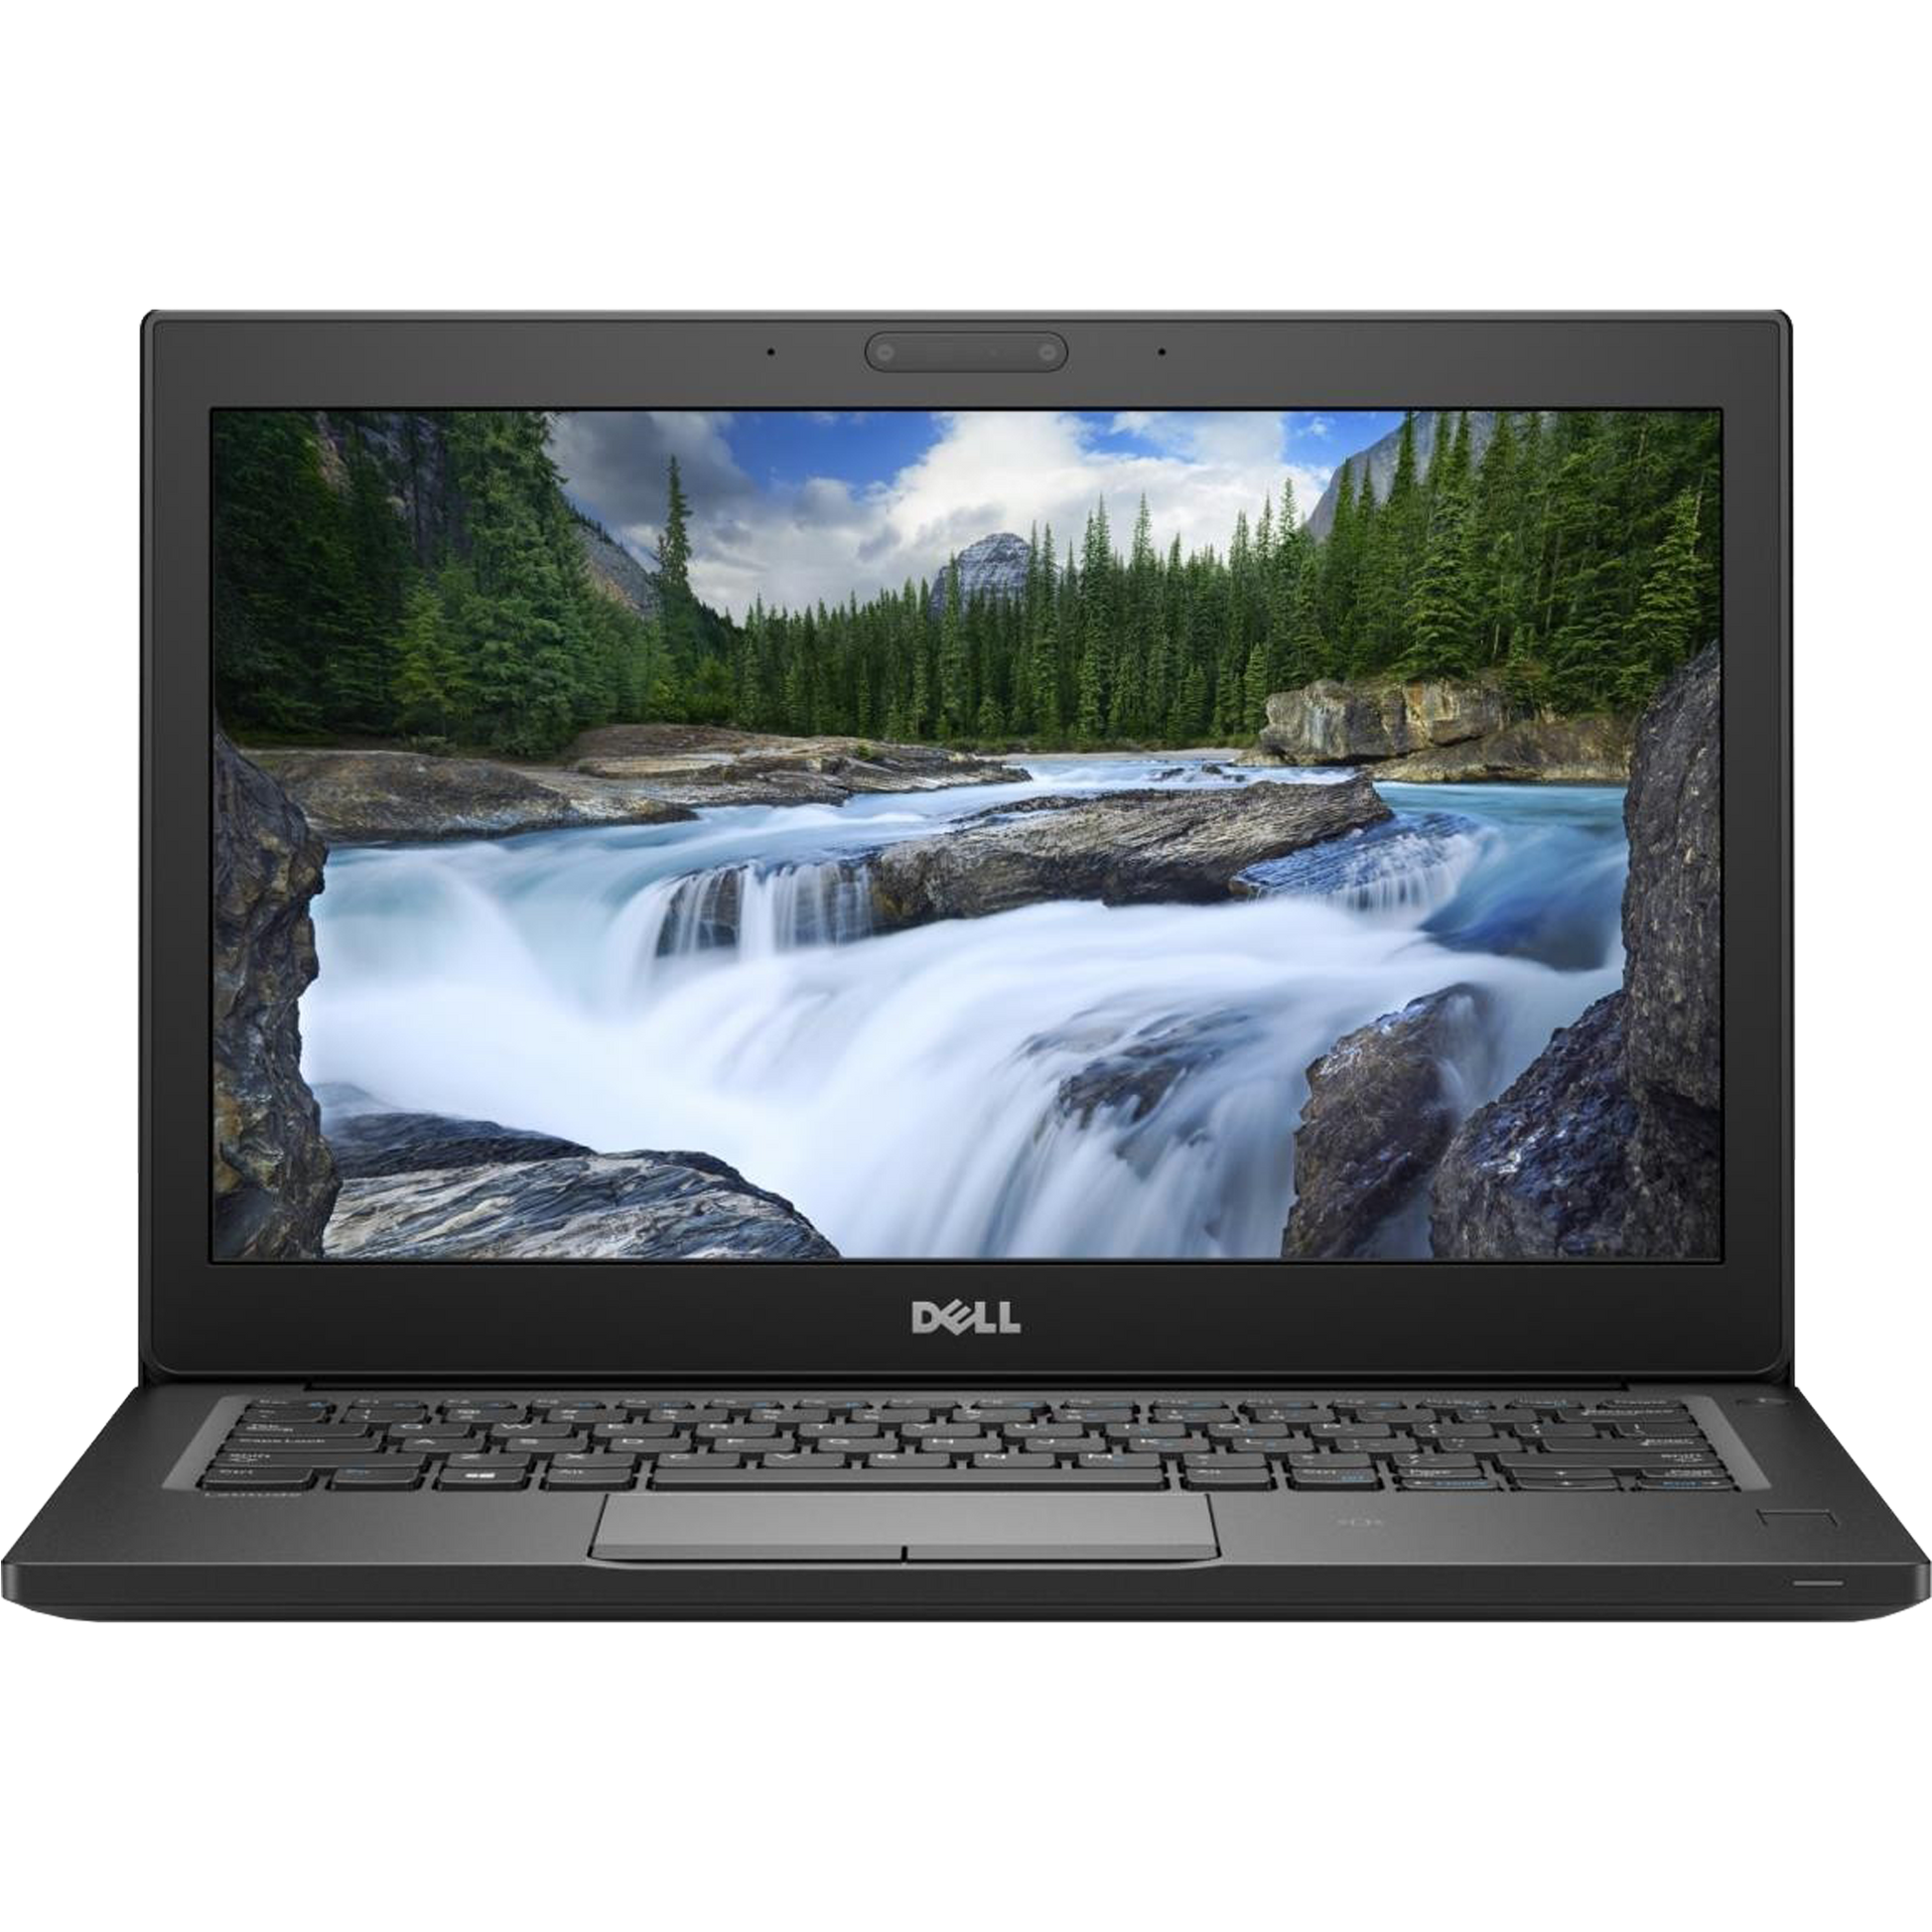 Dell Latitude 7290 Intel i7, 8th Gen Screen Laptop with 16GB Ram Laptops - Refurbished